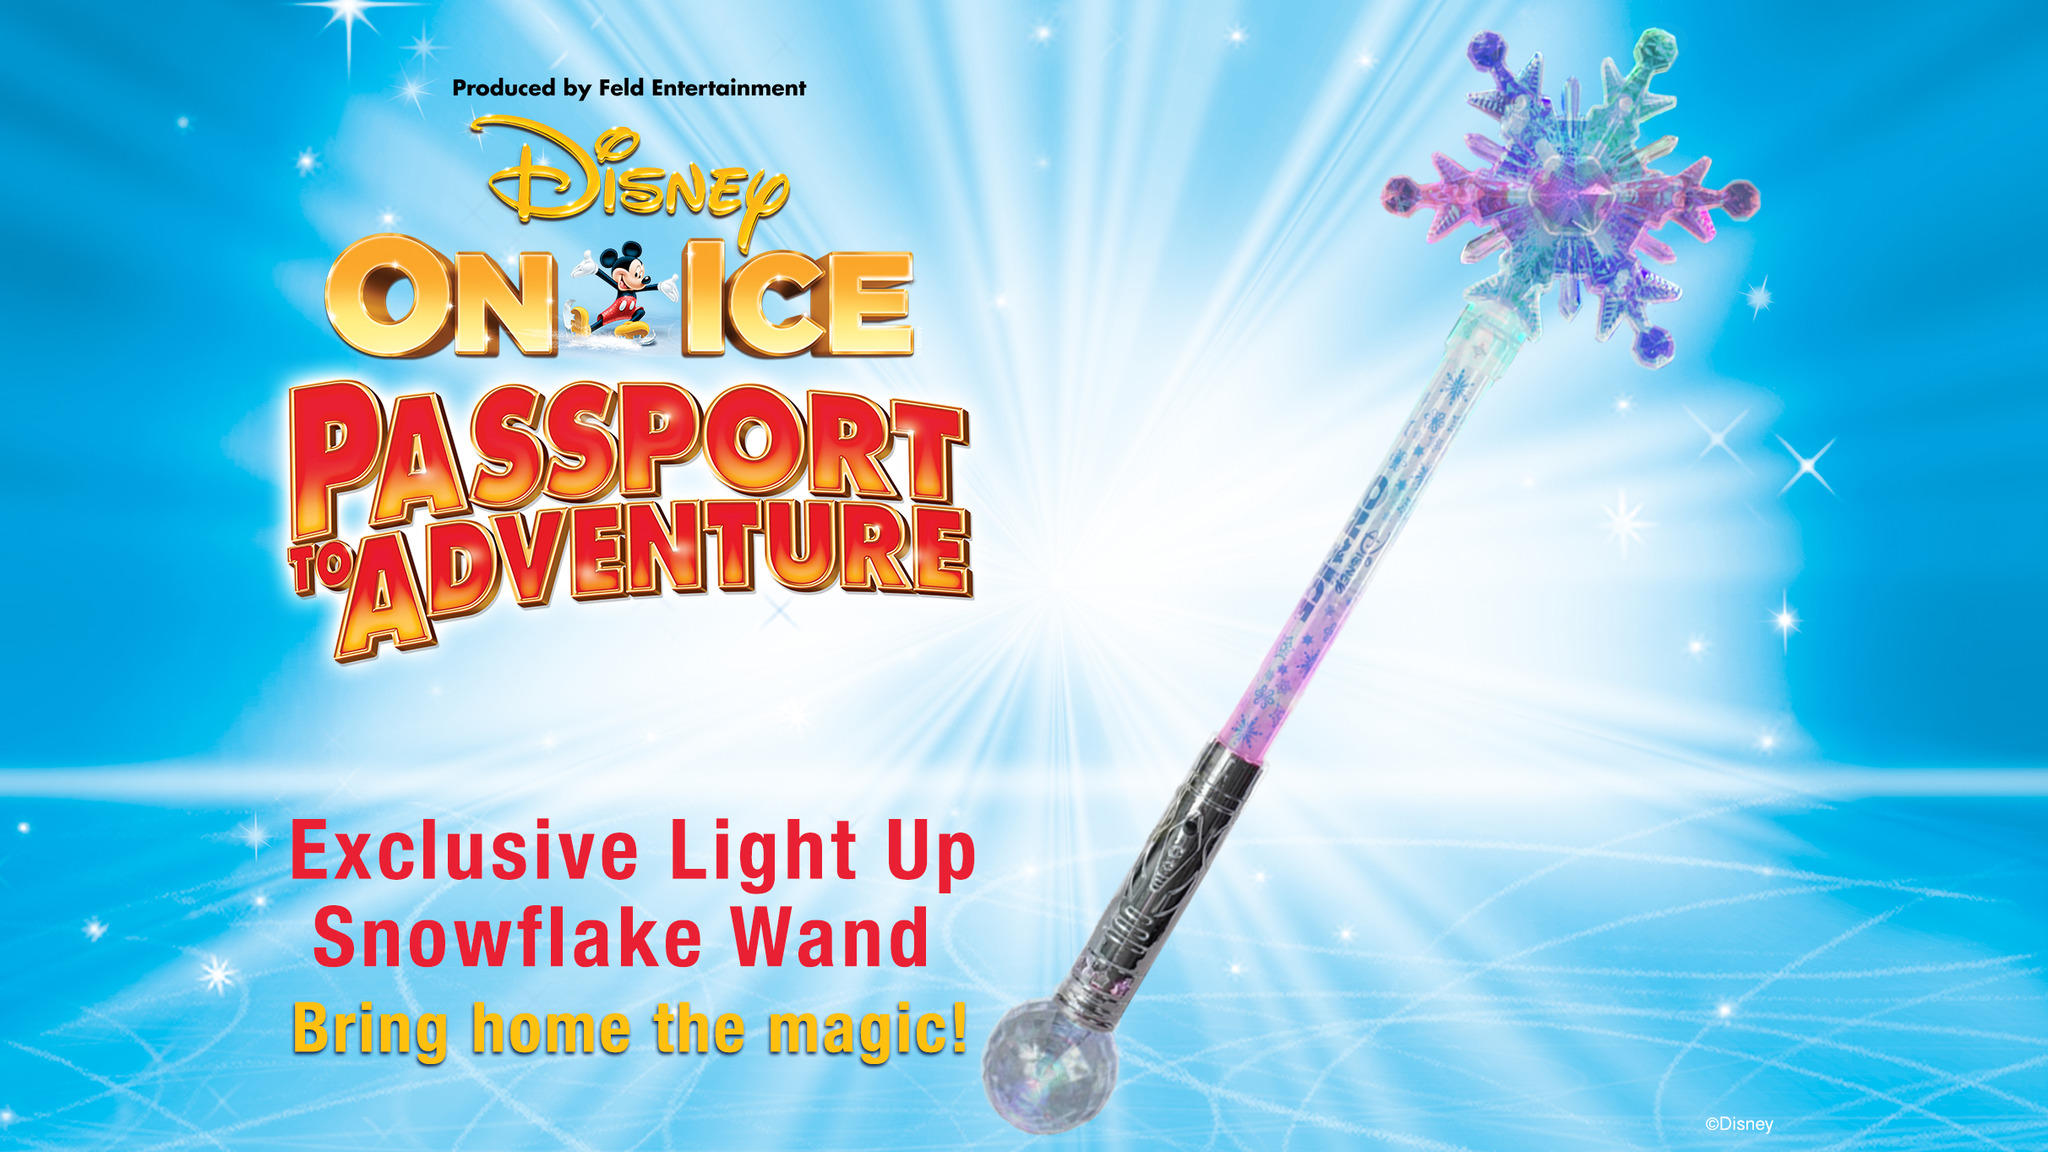 Disney On Ice! Passport to Adventure LightUp Snowflake Wand Tickets